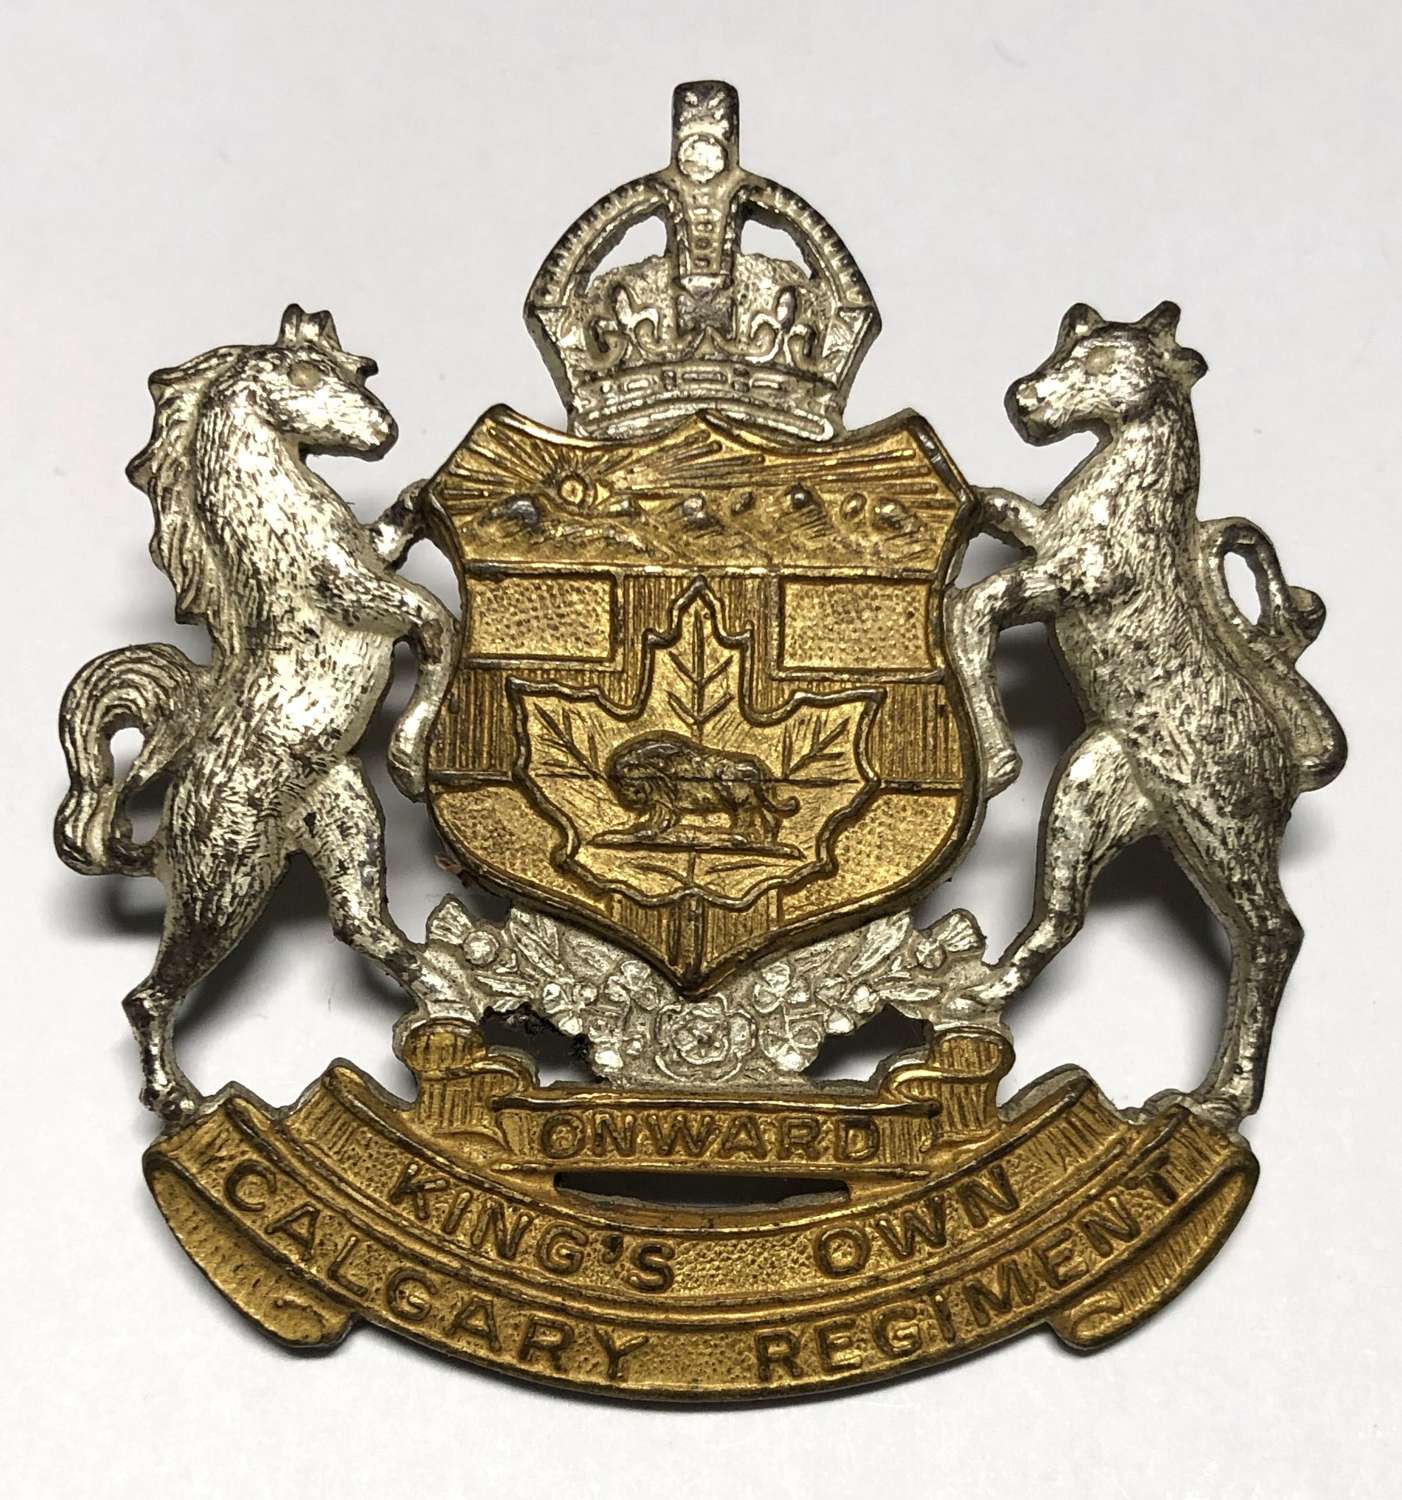 Canada. Kings Own Calgarry Regiment Officer's cap badge